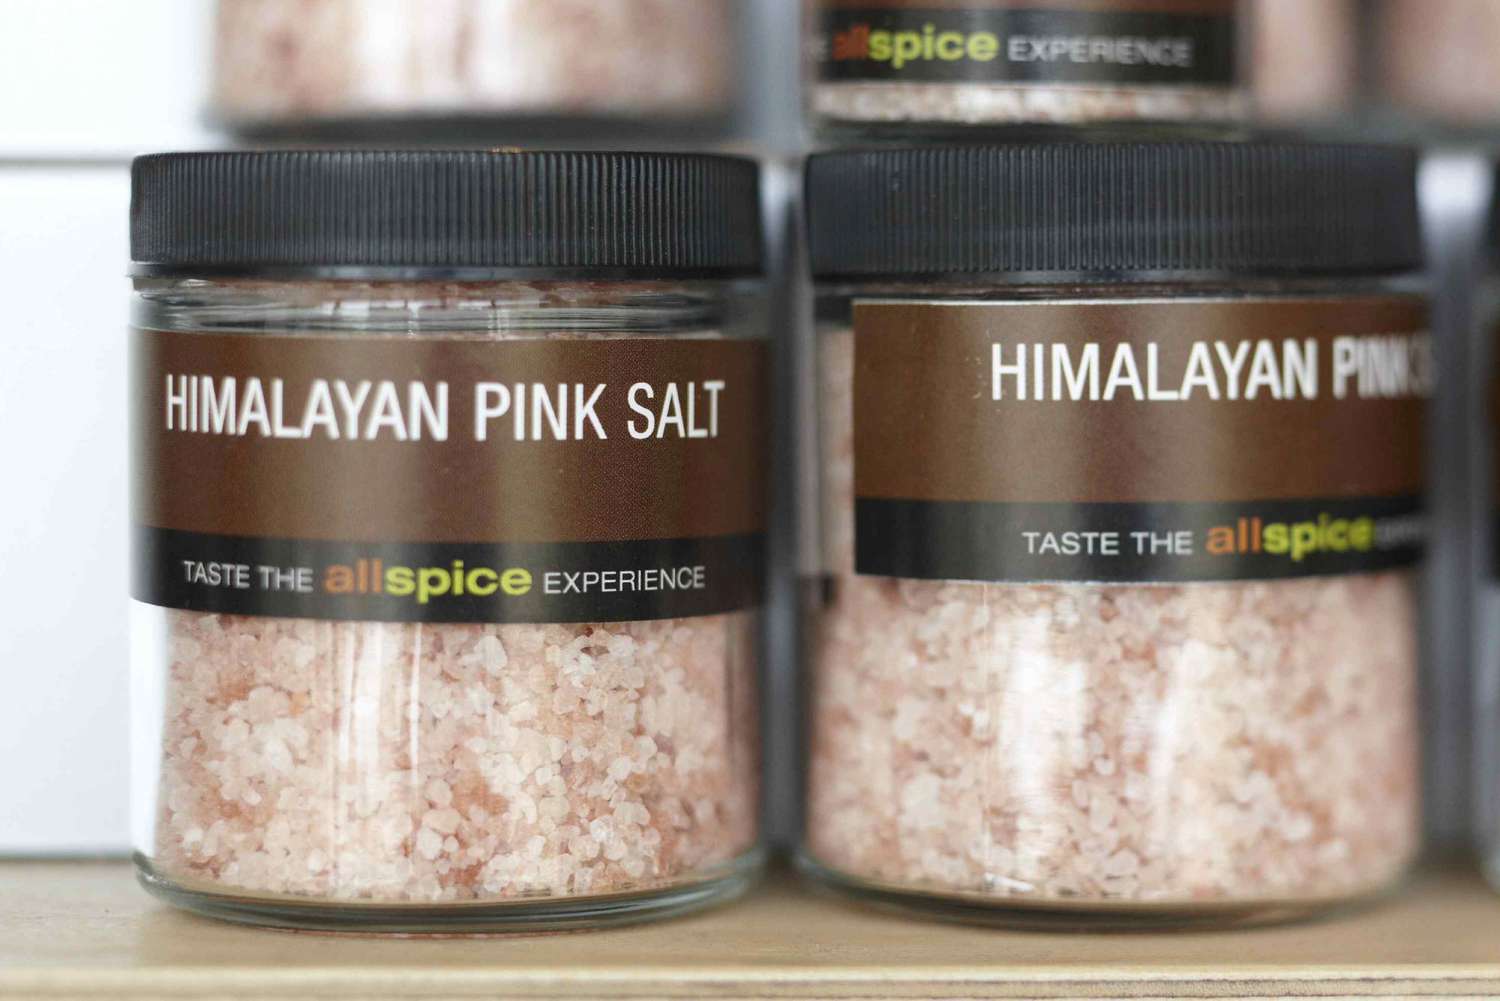 Himalayan Pink Salt in spice jars